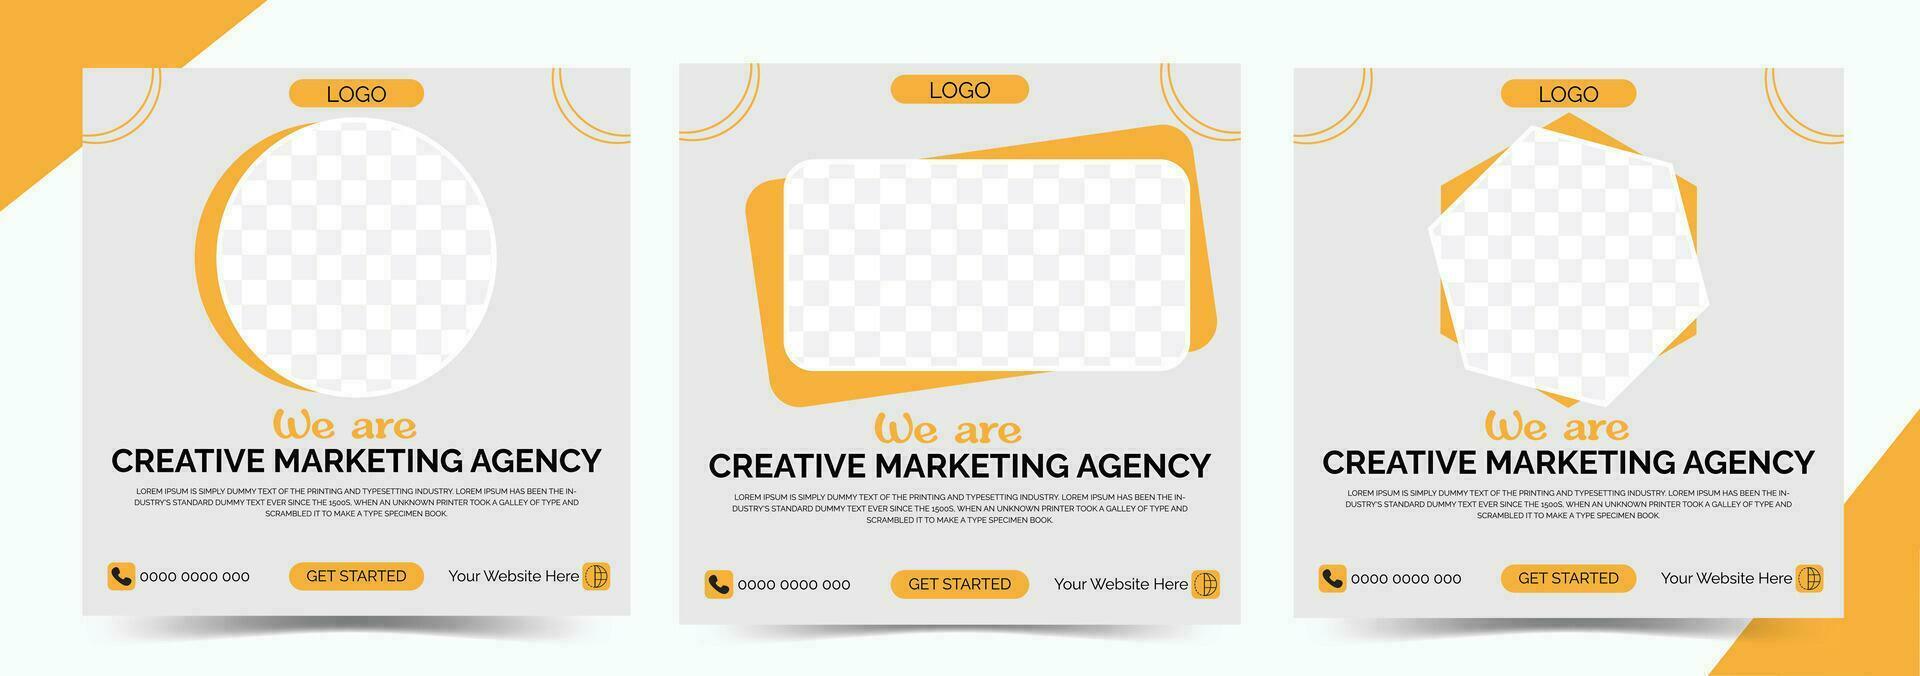 Marketing Agency Social Media Post Design. Square Shape Social Media Banner Illustration. vector